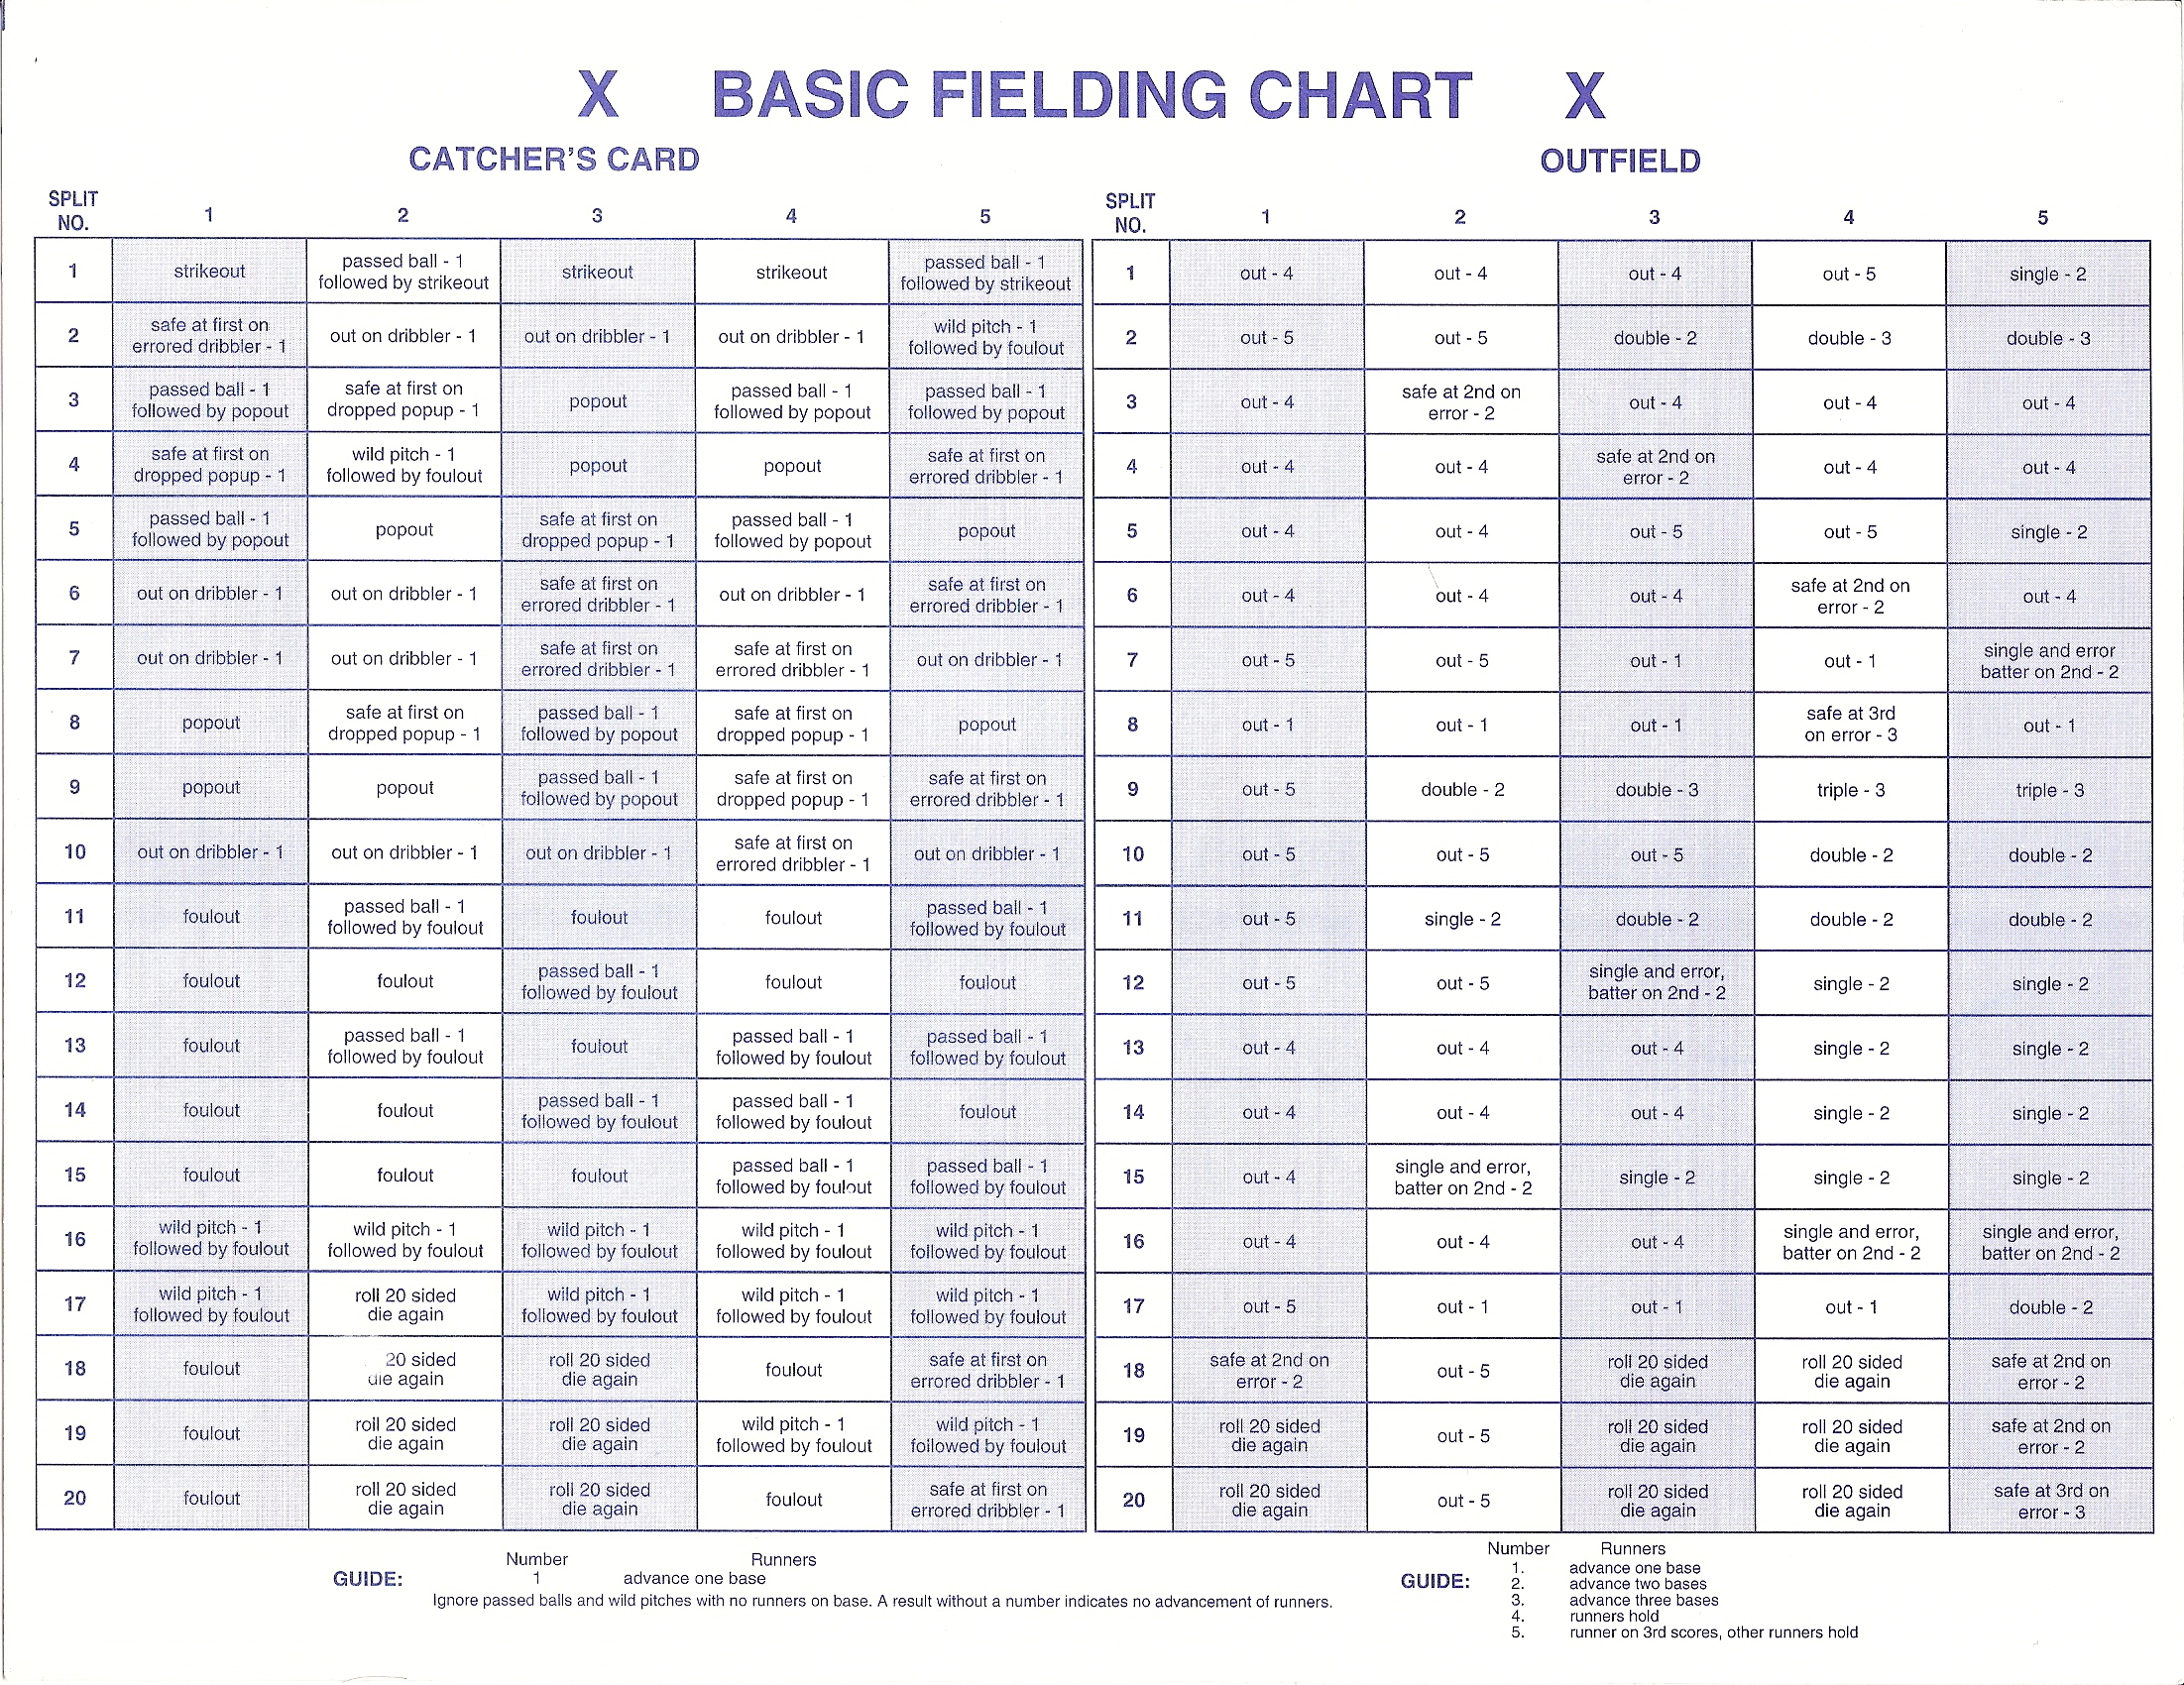 Strat O Matic Super Advanced Fielding Chart